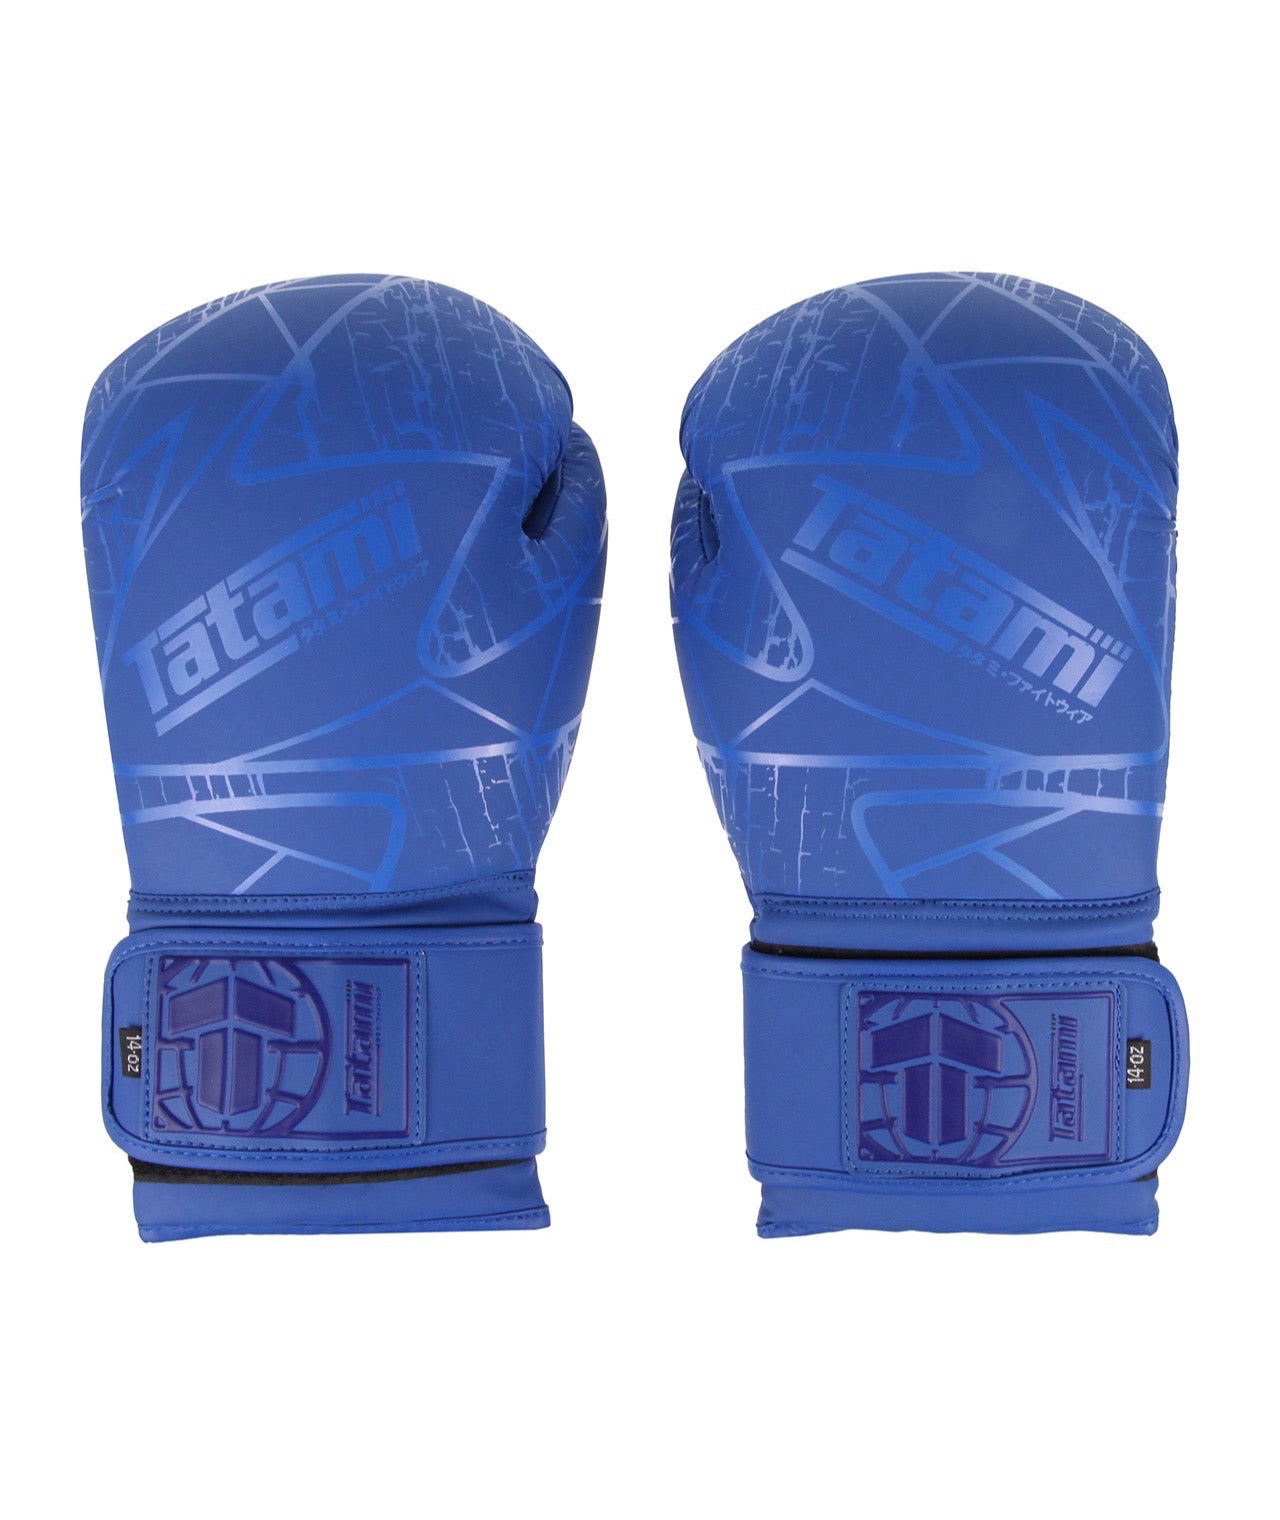 TATAMI Obsidian Boxing Gloves - Blue